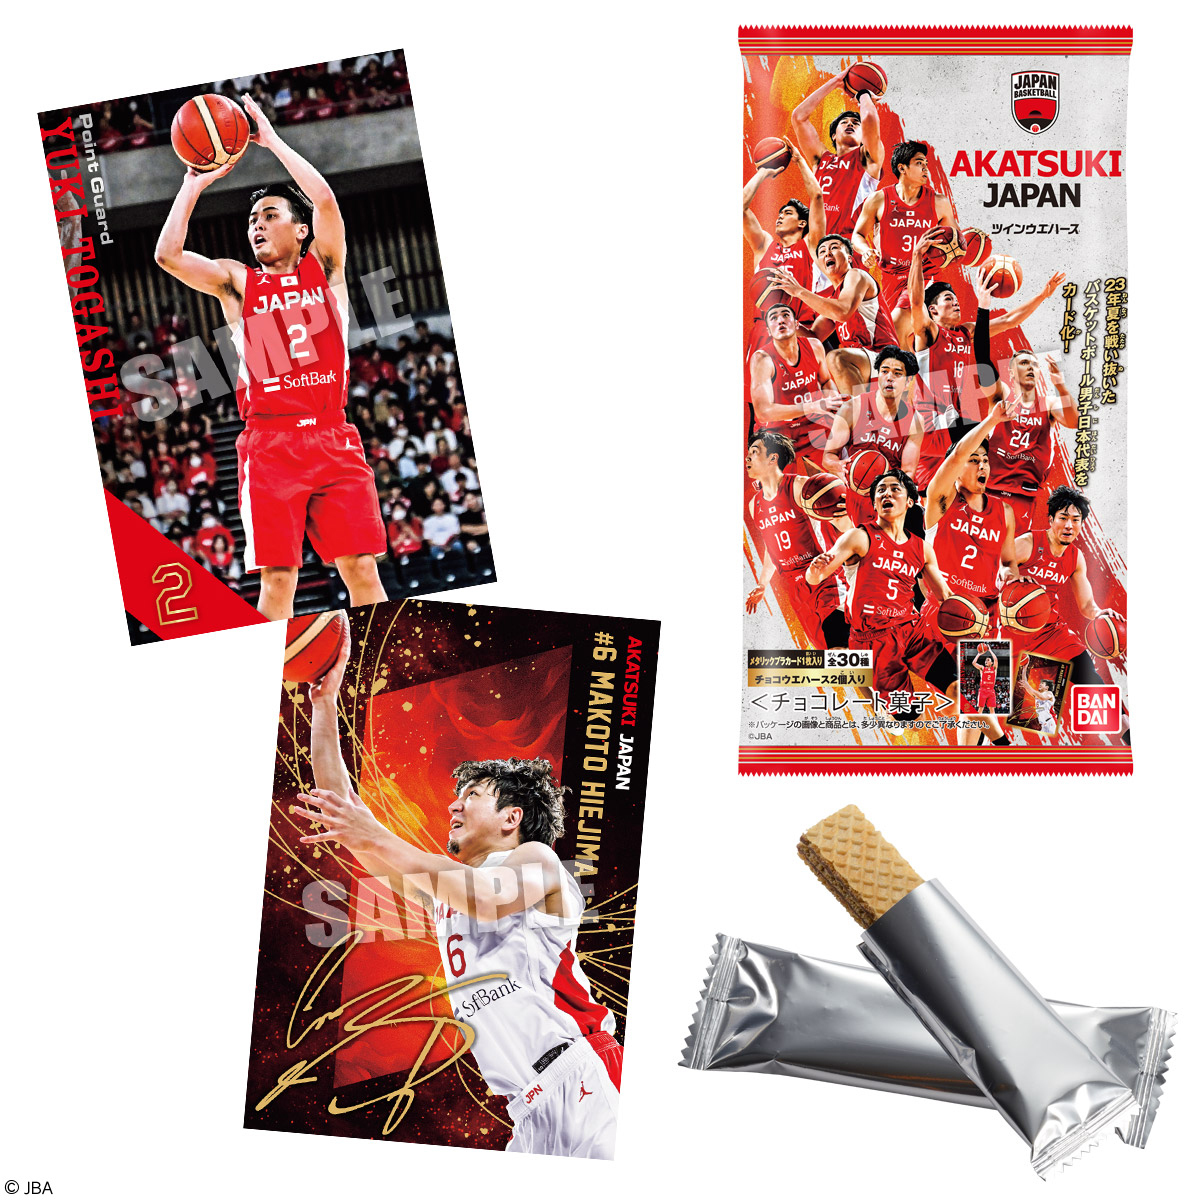 『AKATSUKI JAPAN』バスケットボール男子日本代表の
カード付ウエハースが新登場！
2023年夏を戦い抜いた選手たちを収録！